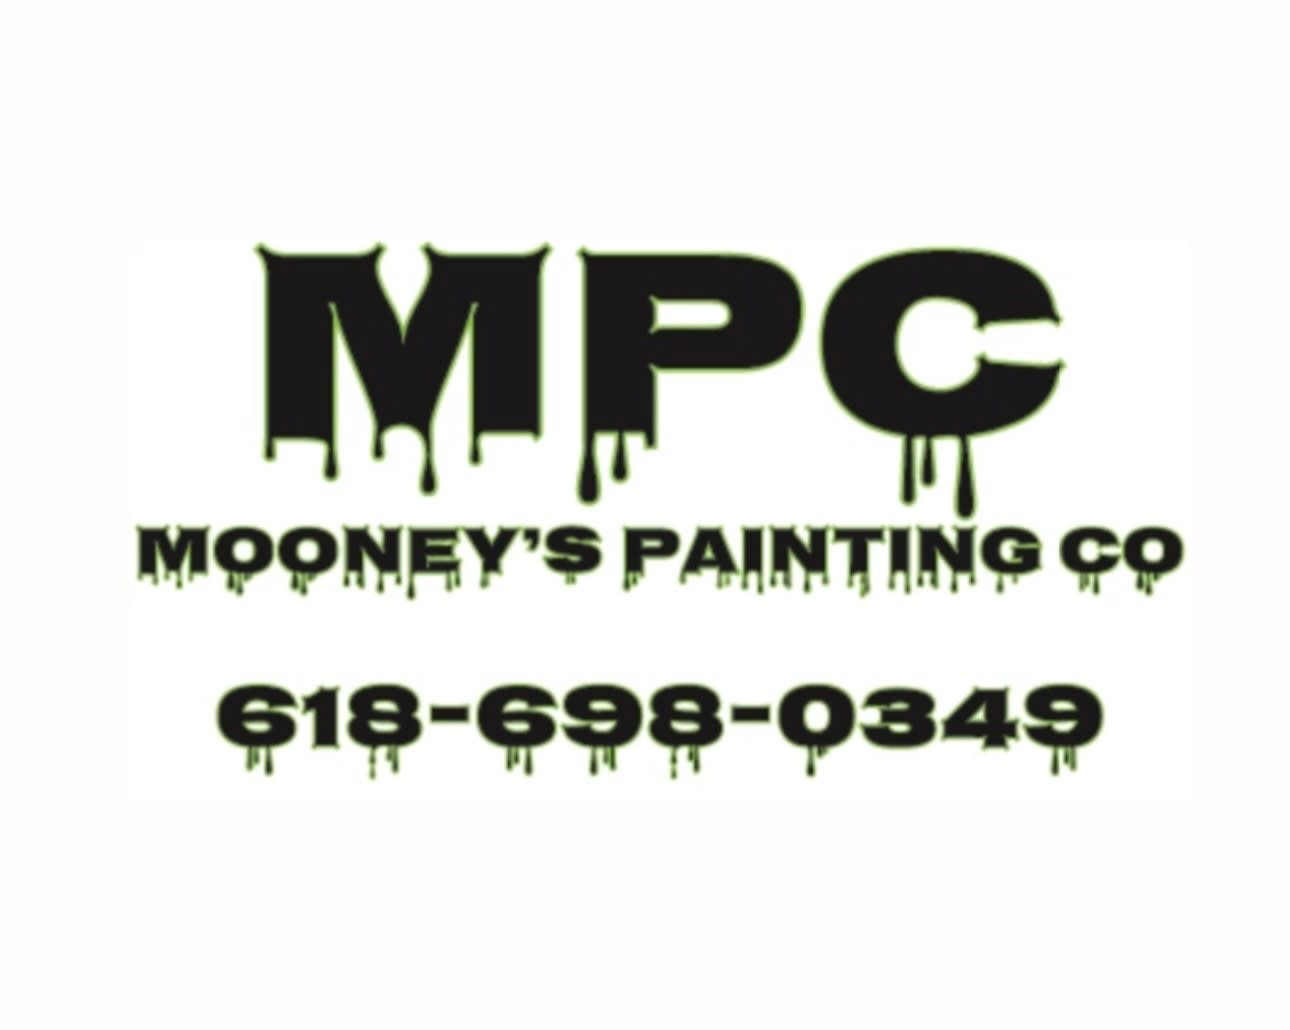 Mooney’s Painting Co